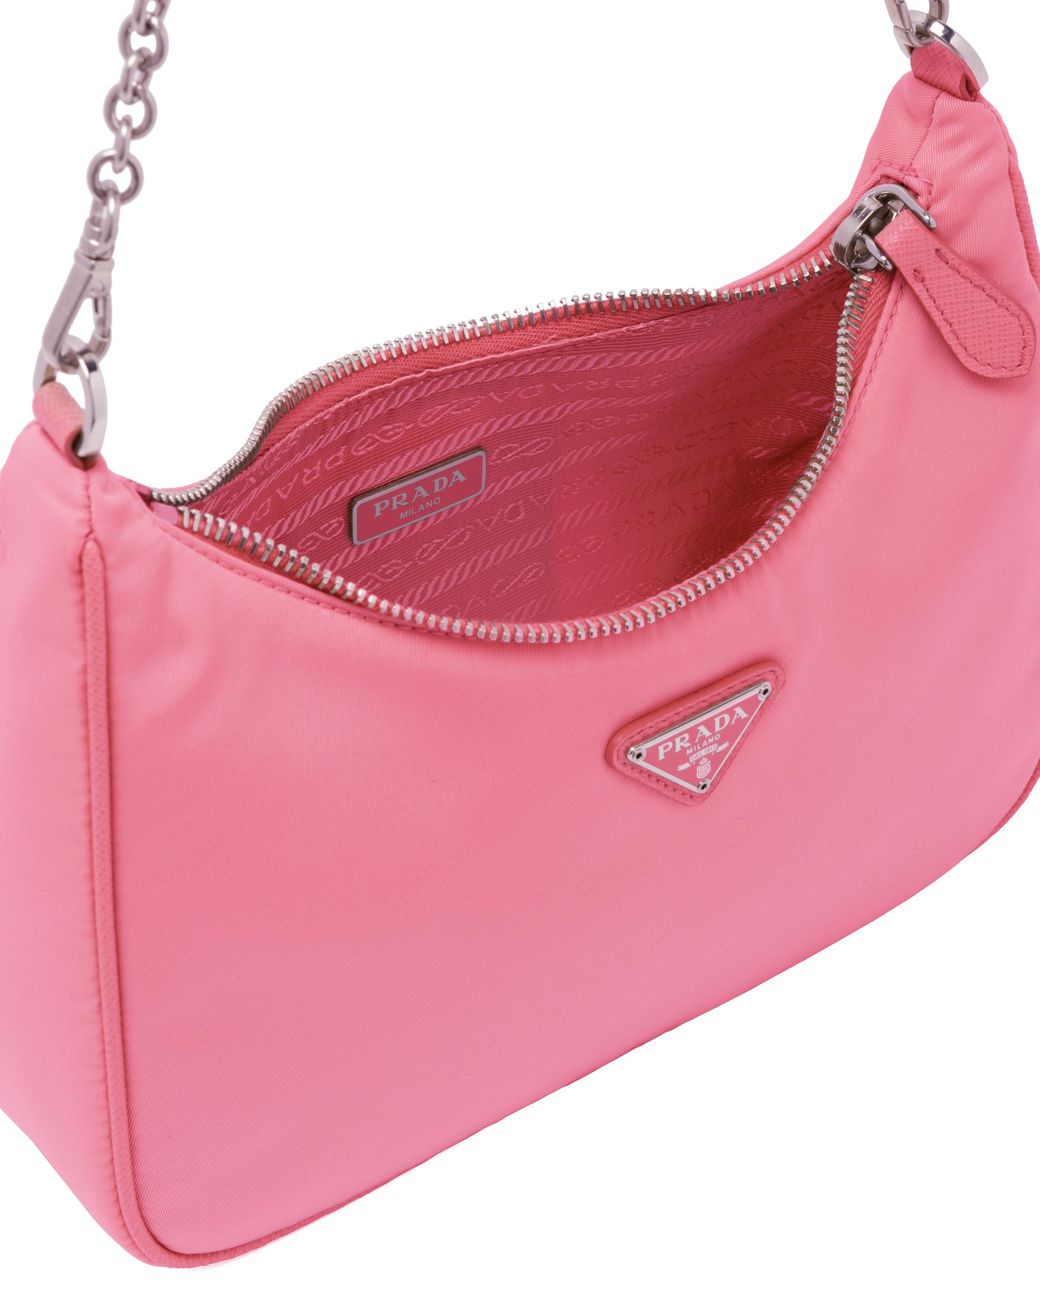 Re Edition 2005 Shearling Shoulder Bag in Pink - Prada